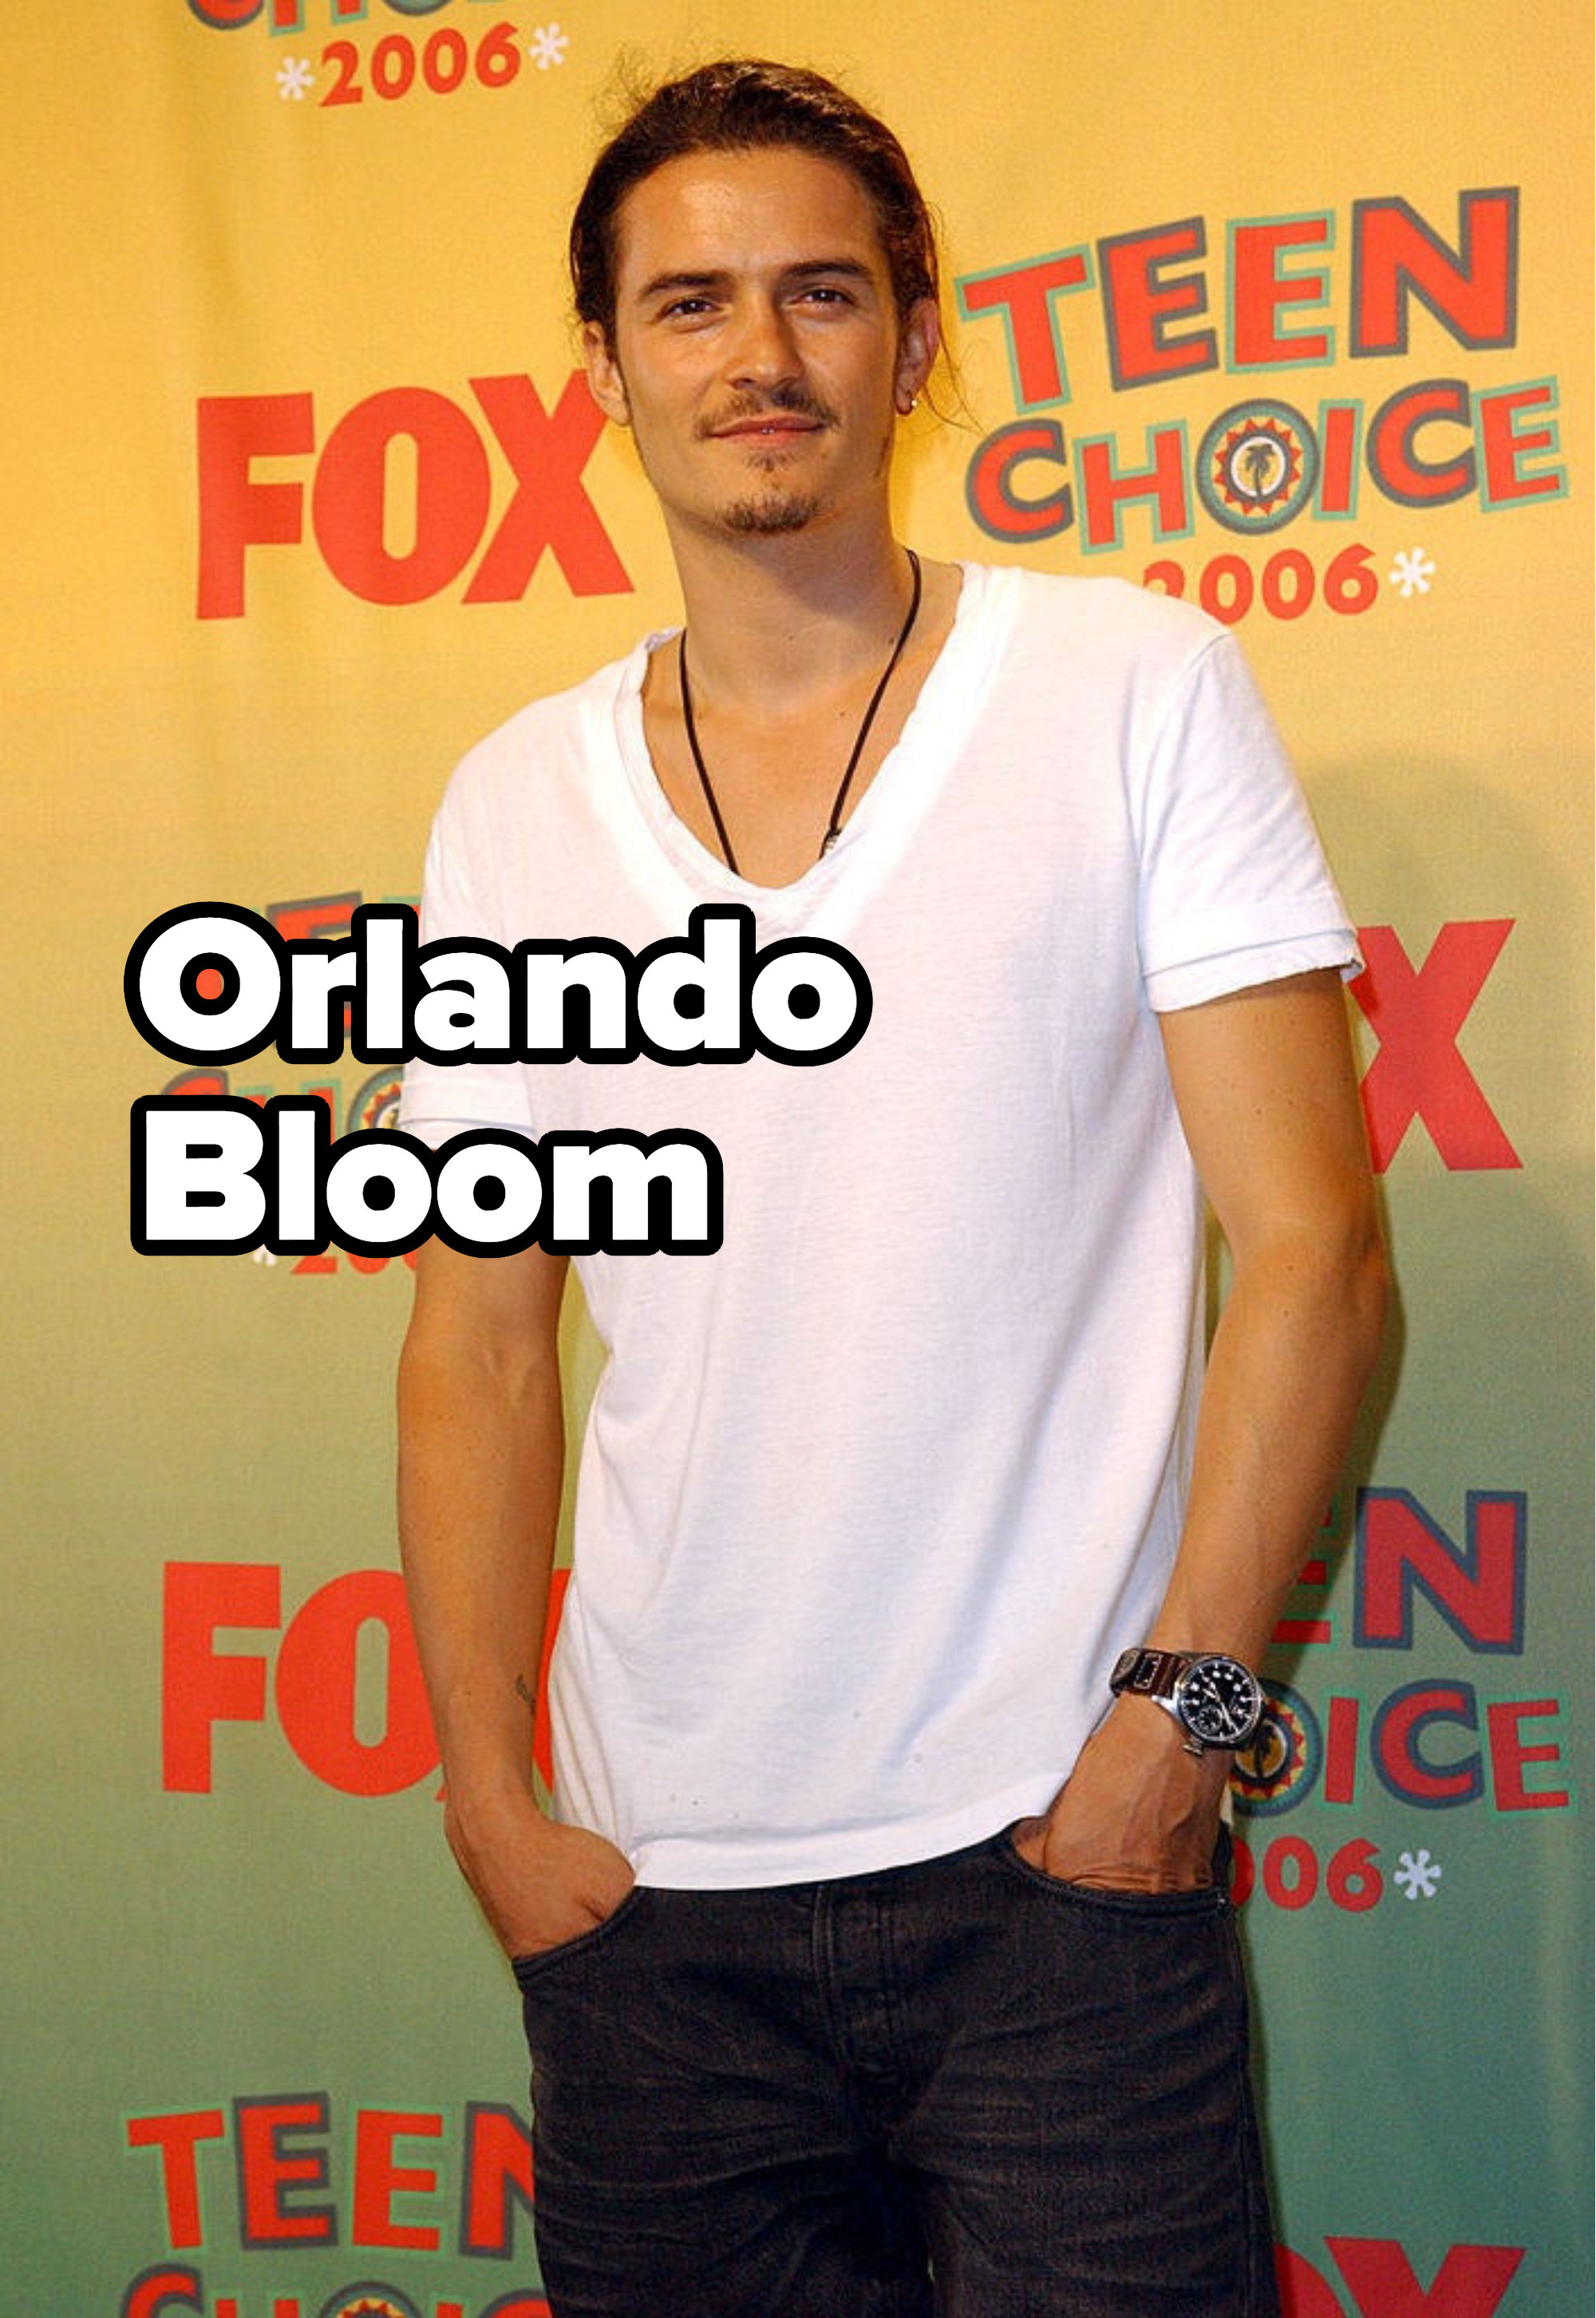 Orlando Bloom